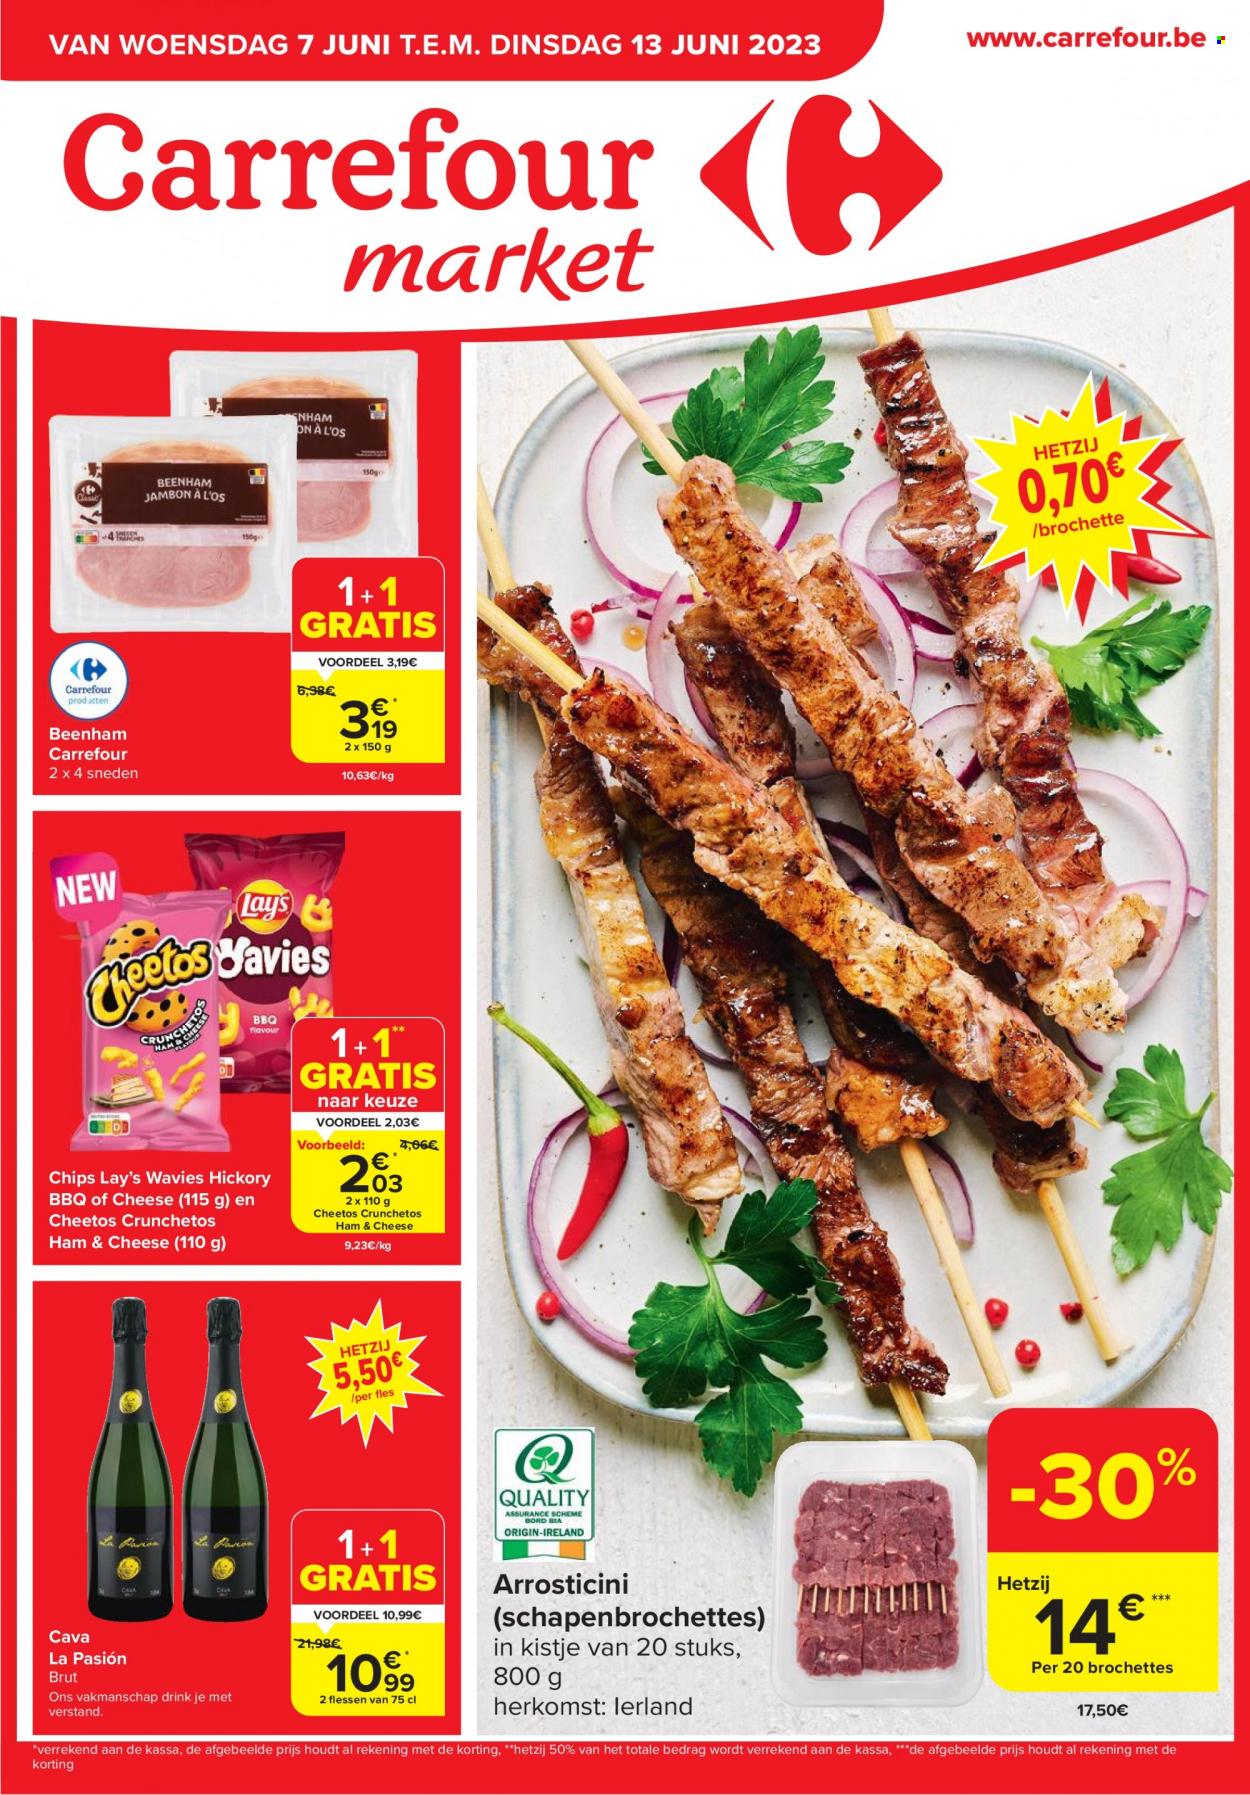 thumbnail - Carrefour market-aanbieding - 07/06/2023 - 13/06/2023 -  producten in de aanbieding - beenham, ham, cheetos, chips, BBQ, Cava. Pagina 1.